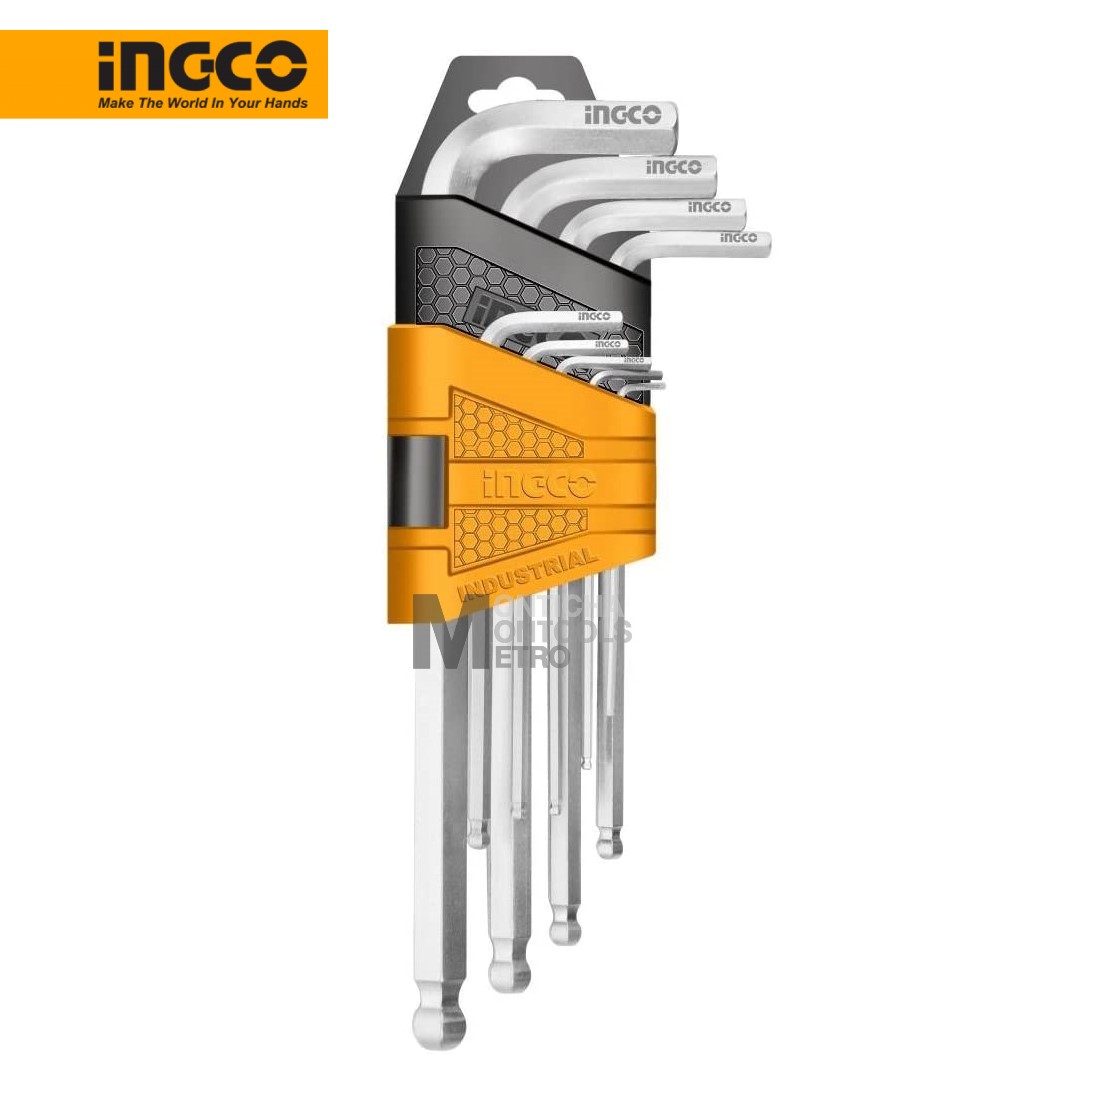 INGCO ประแจแอล 9 ชิ้น ขนาด 1.5-10 mm ประกอบด้วยขนาด 1.5, 2, 2.5, 3, 4, 5, 6, 8, 10 มม. HHK11091 รุ่นงานหนัก เหล็กแข็งไม่บิด ไม่มีหวาน by Montools